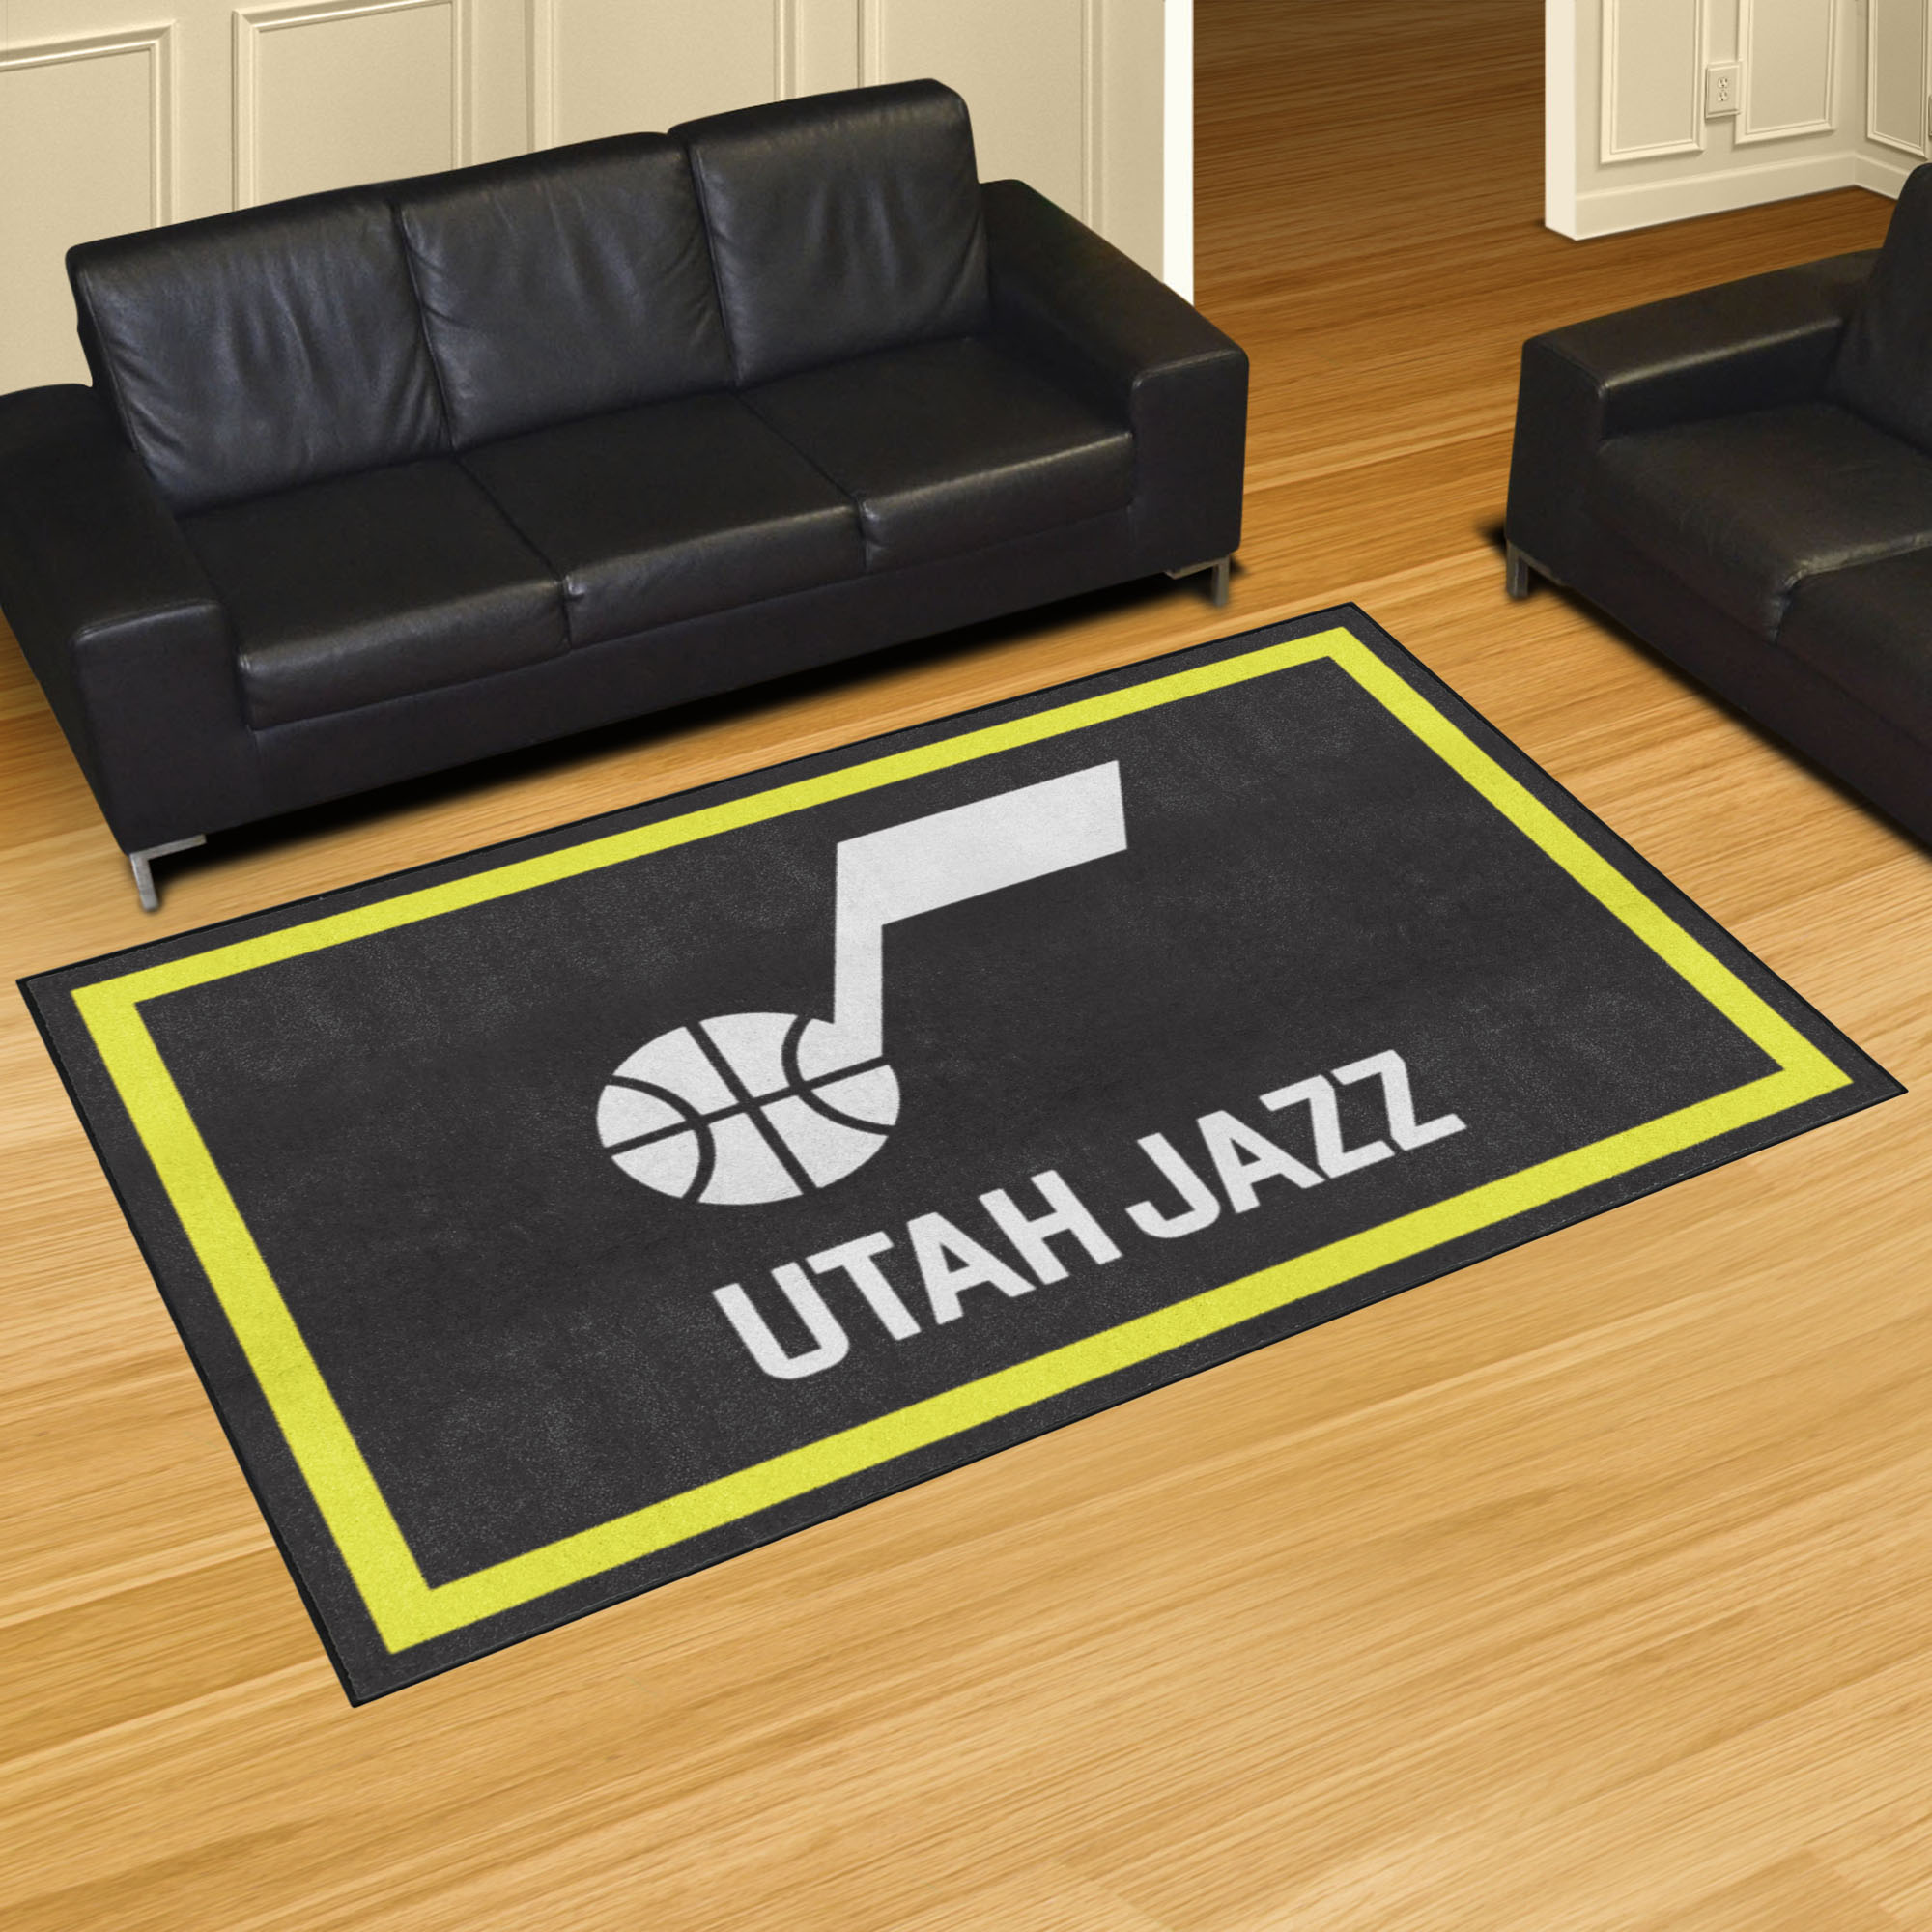 Utah Jazz Area Rug - 5' x 8' Wordmark Nylon